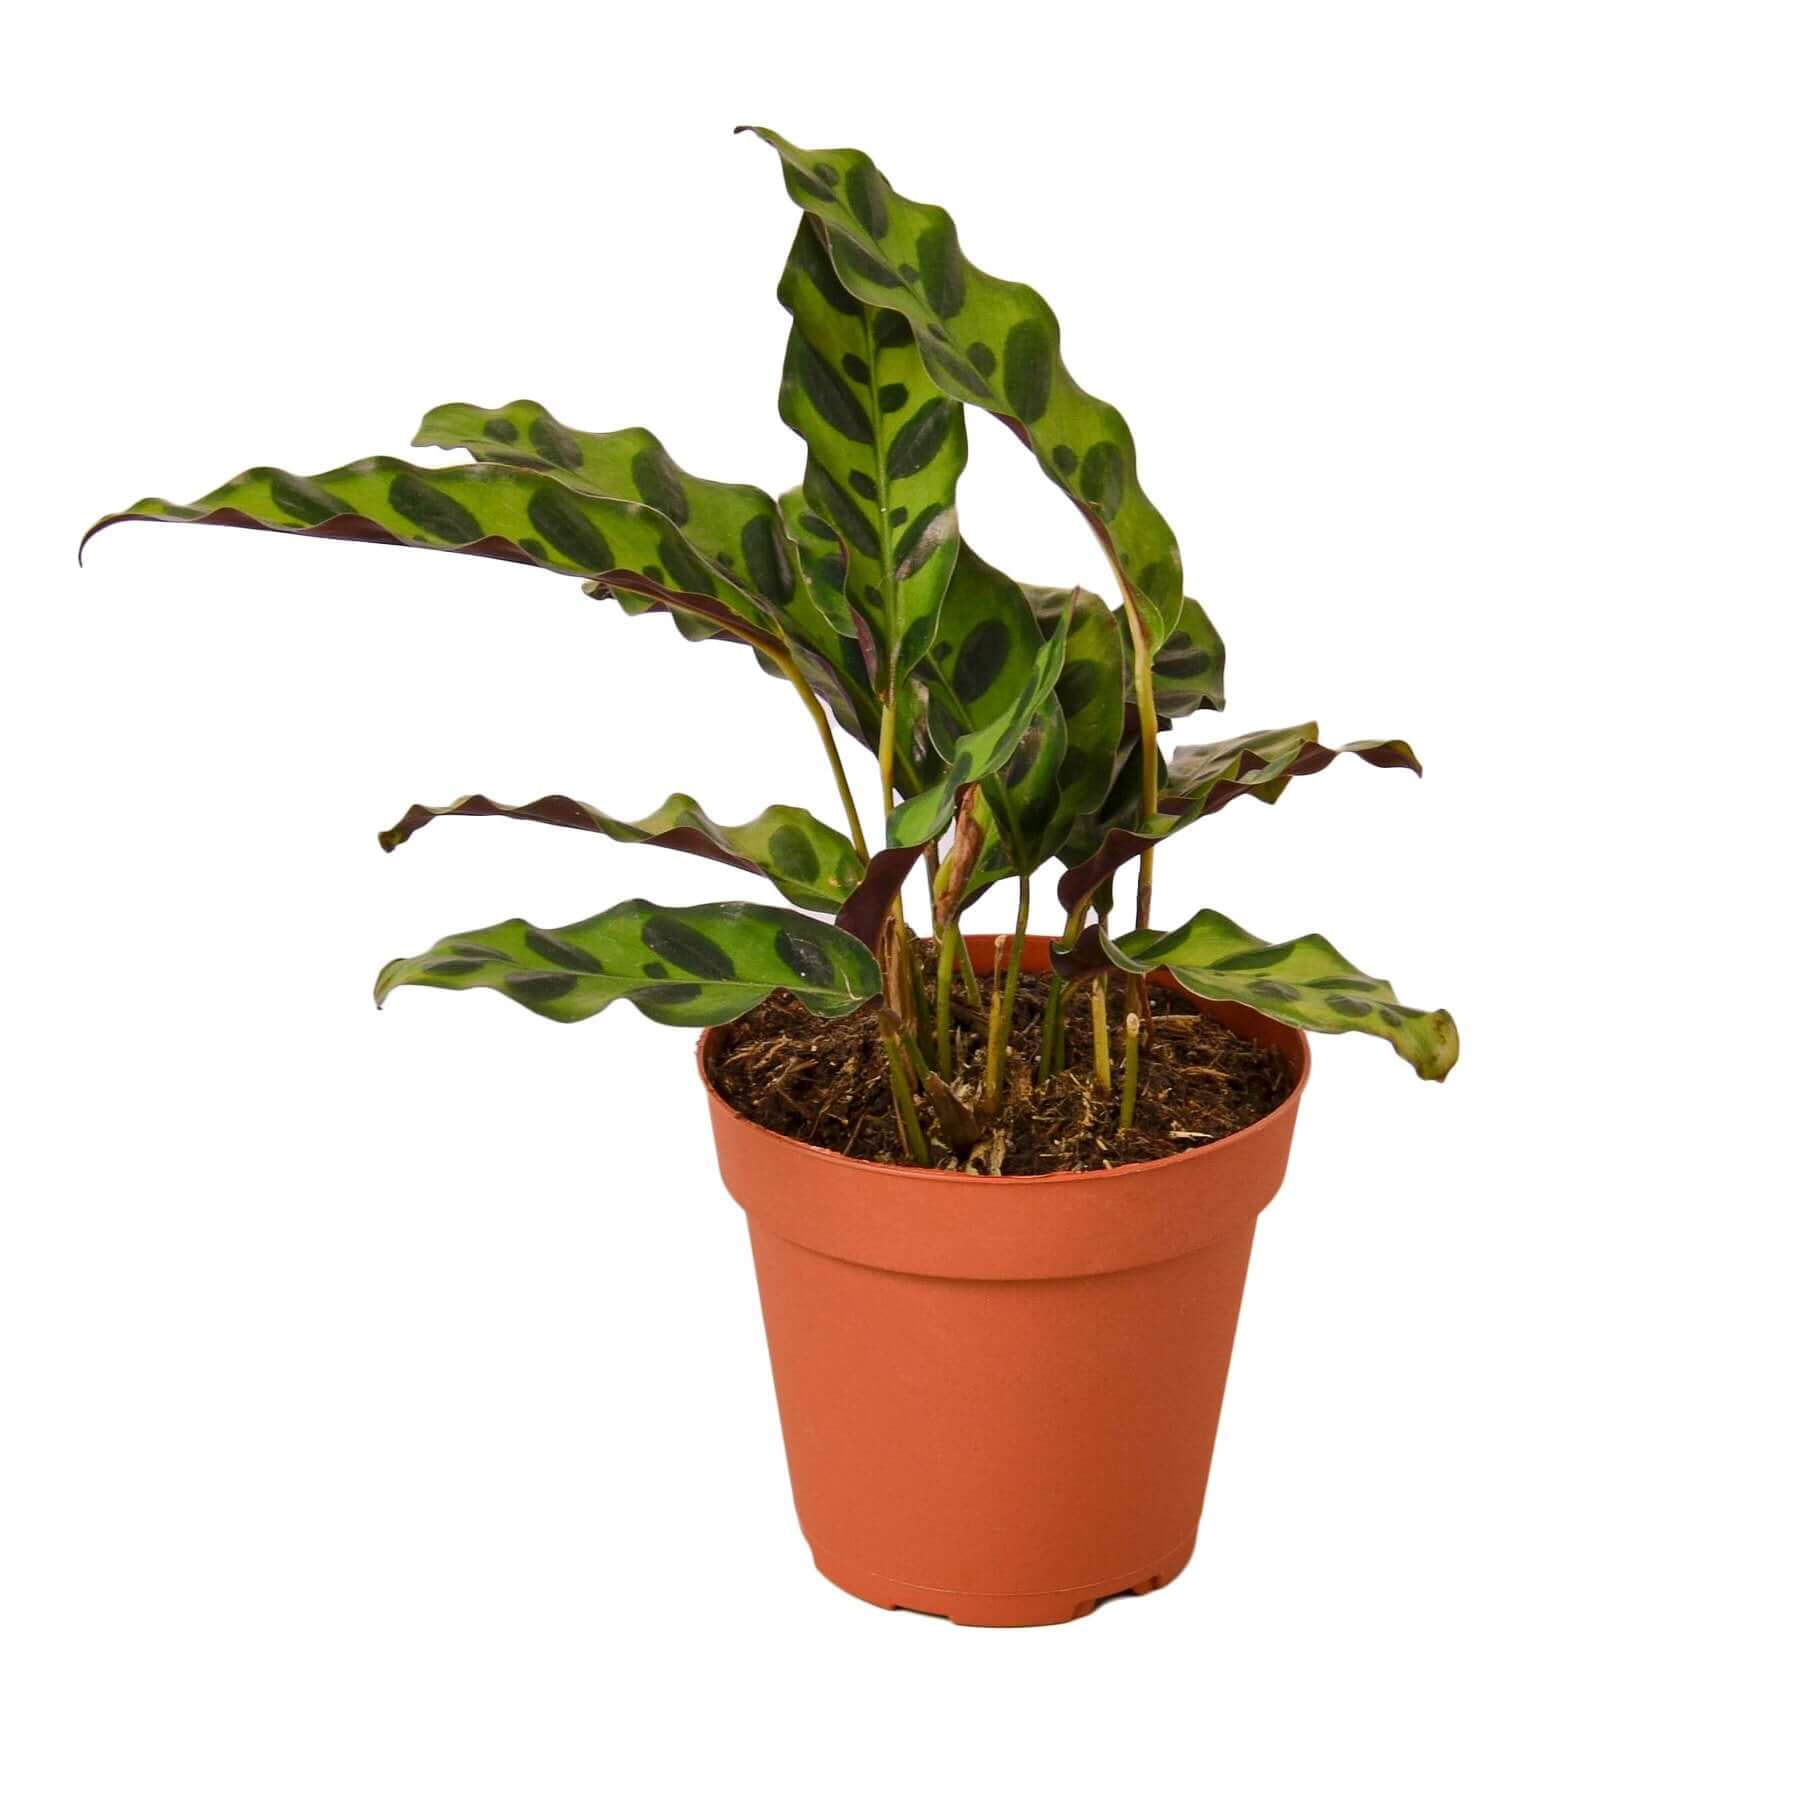 Calathea Lancifolia - Rattlesnake | Modern house plants that clean the air